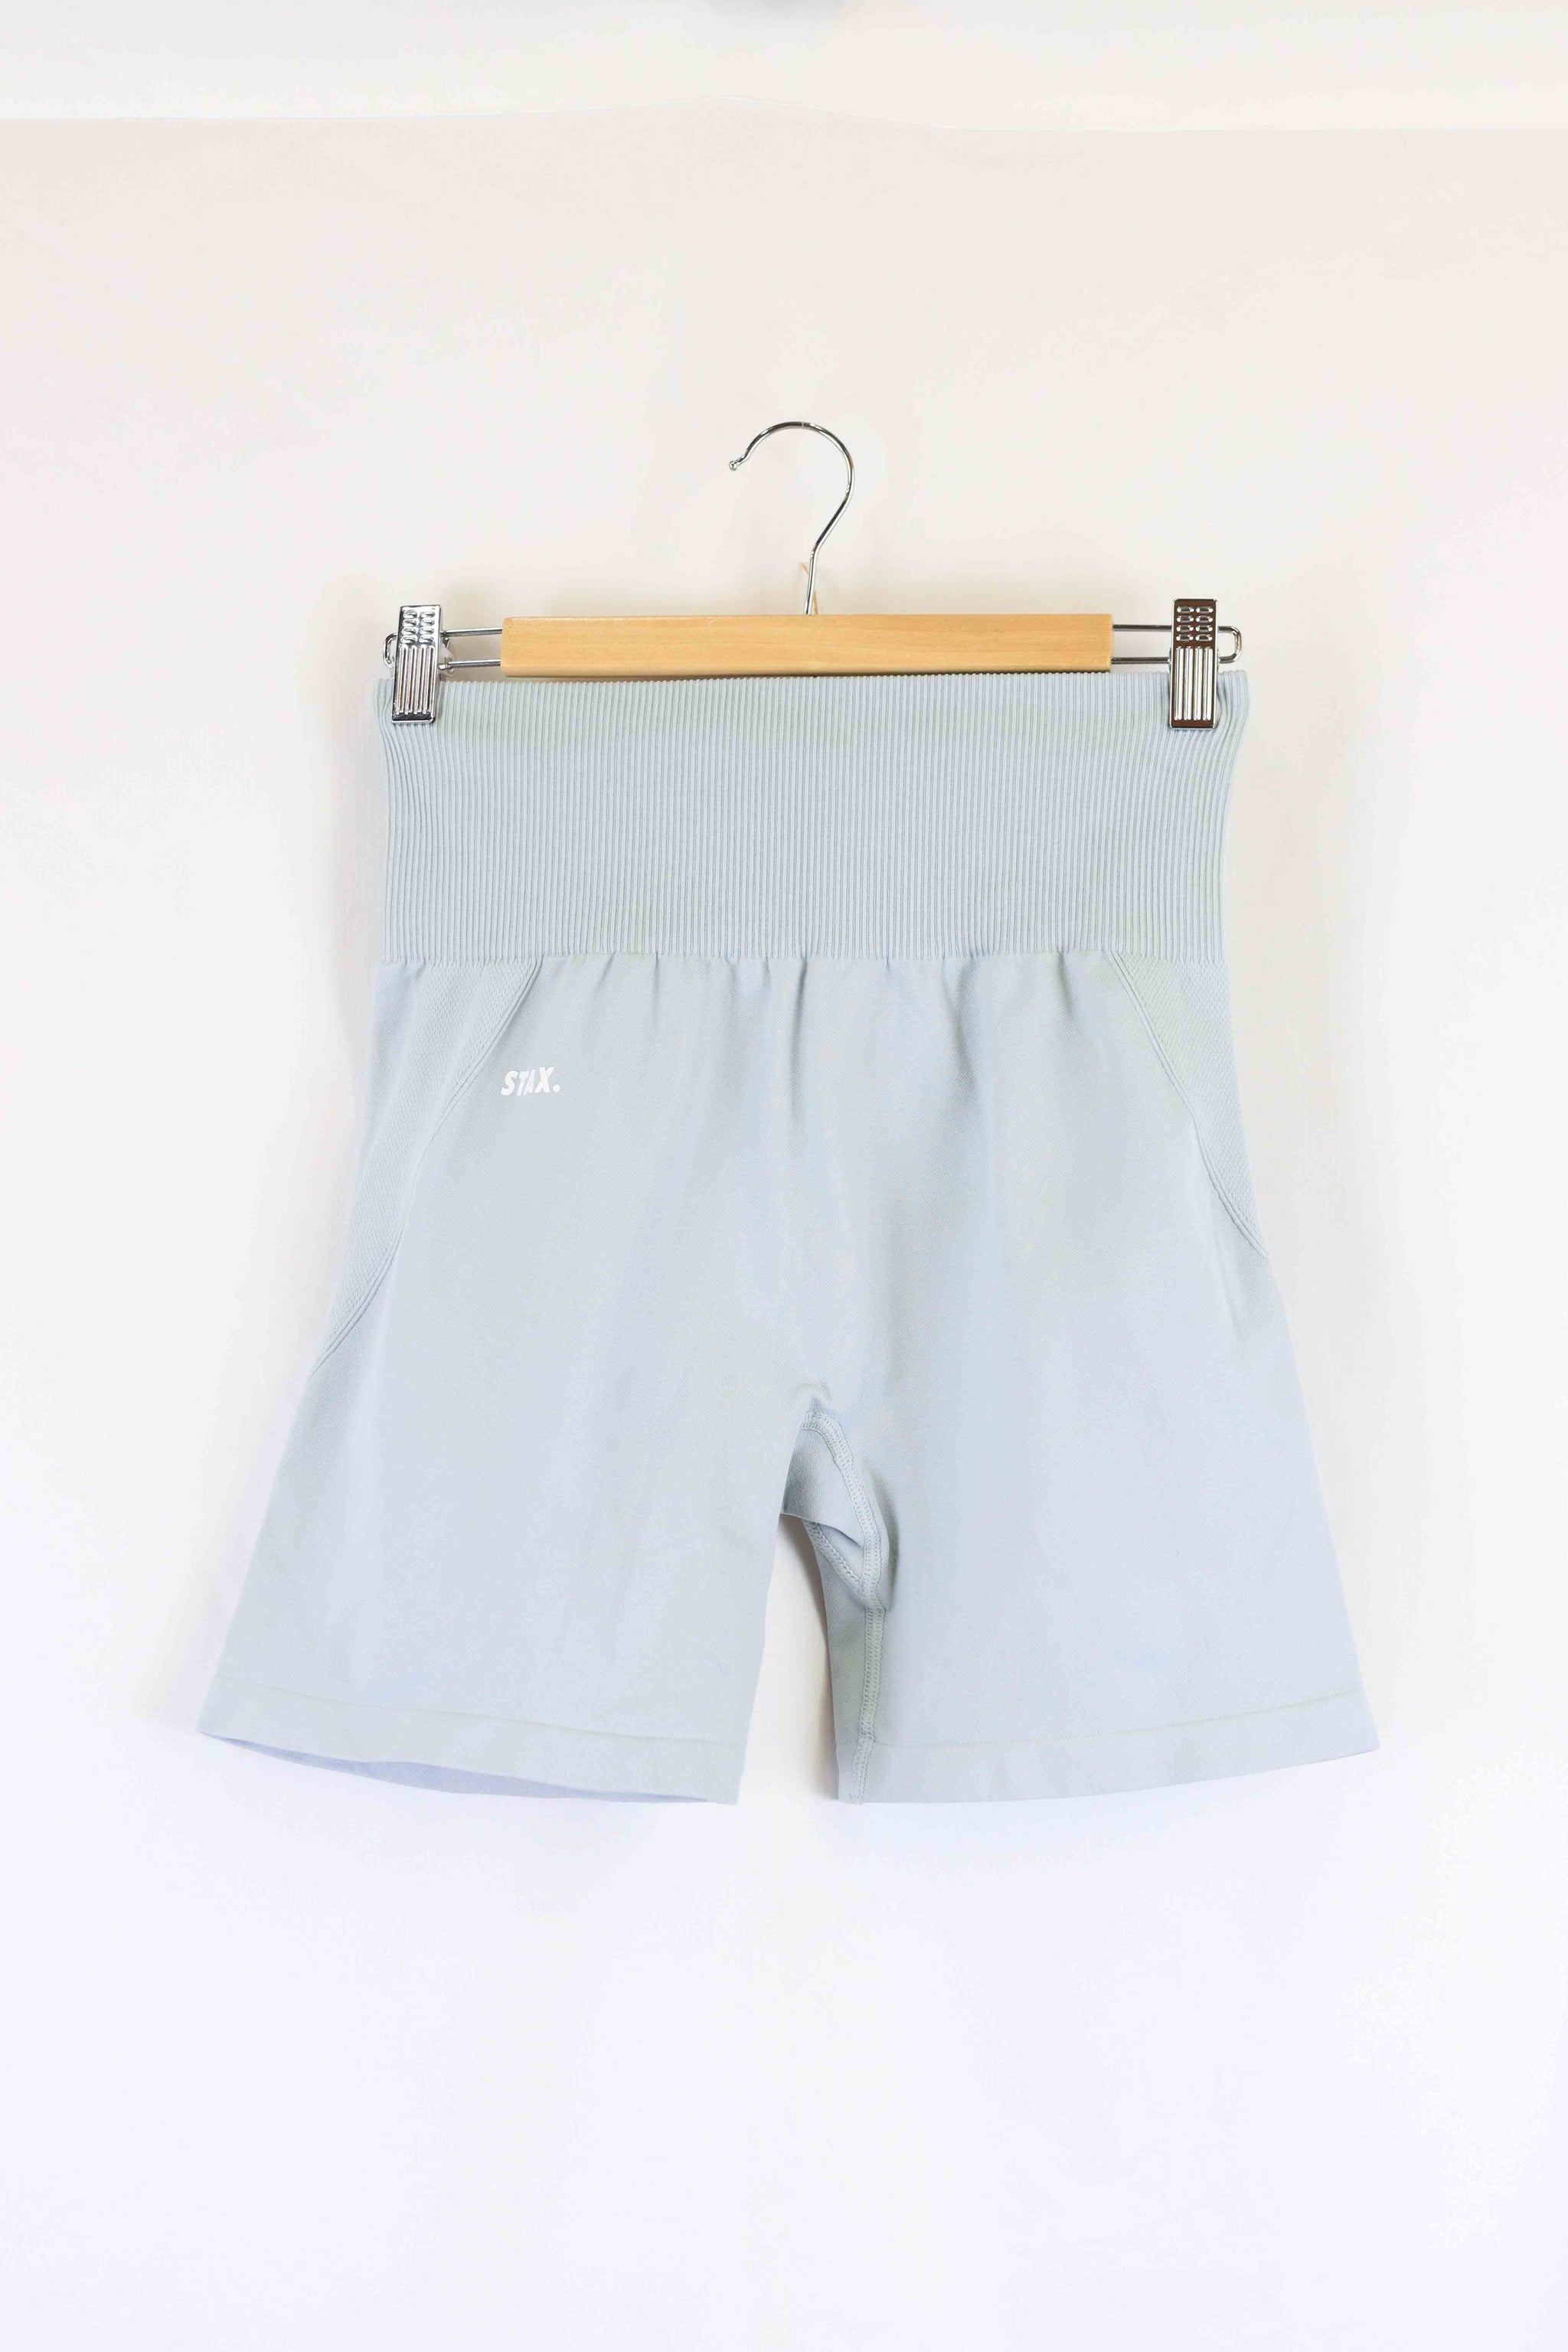 Stax Light Blue Bike Shorts L - Reluv Clothing Australia